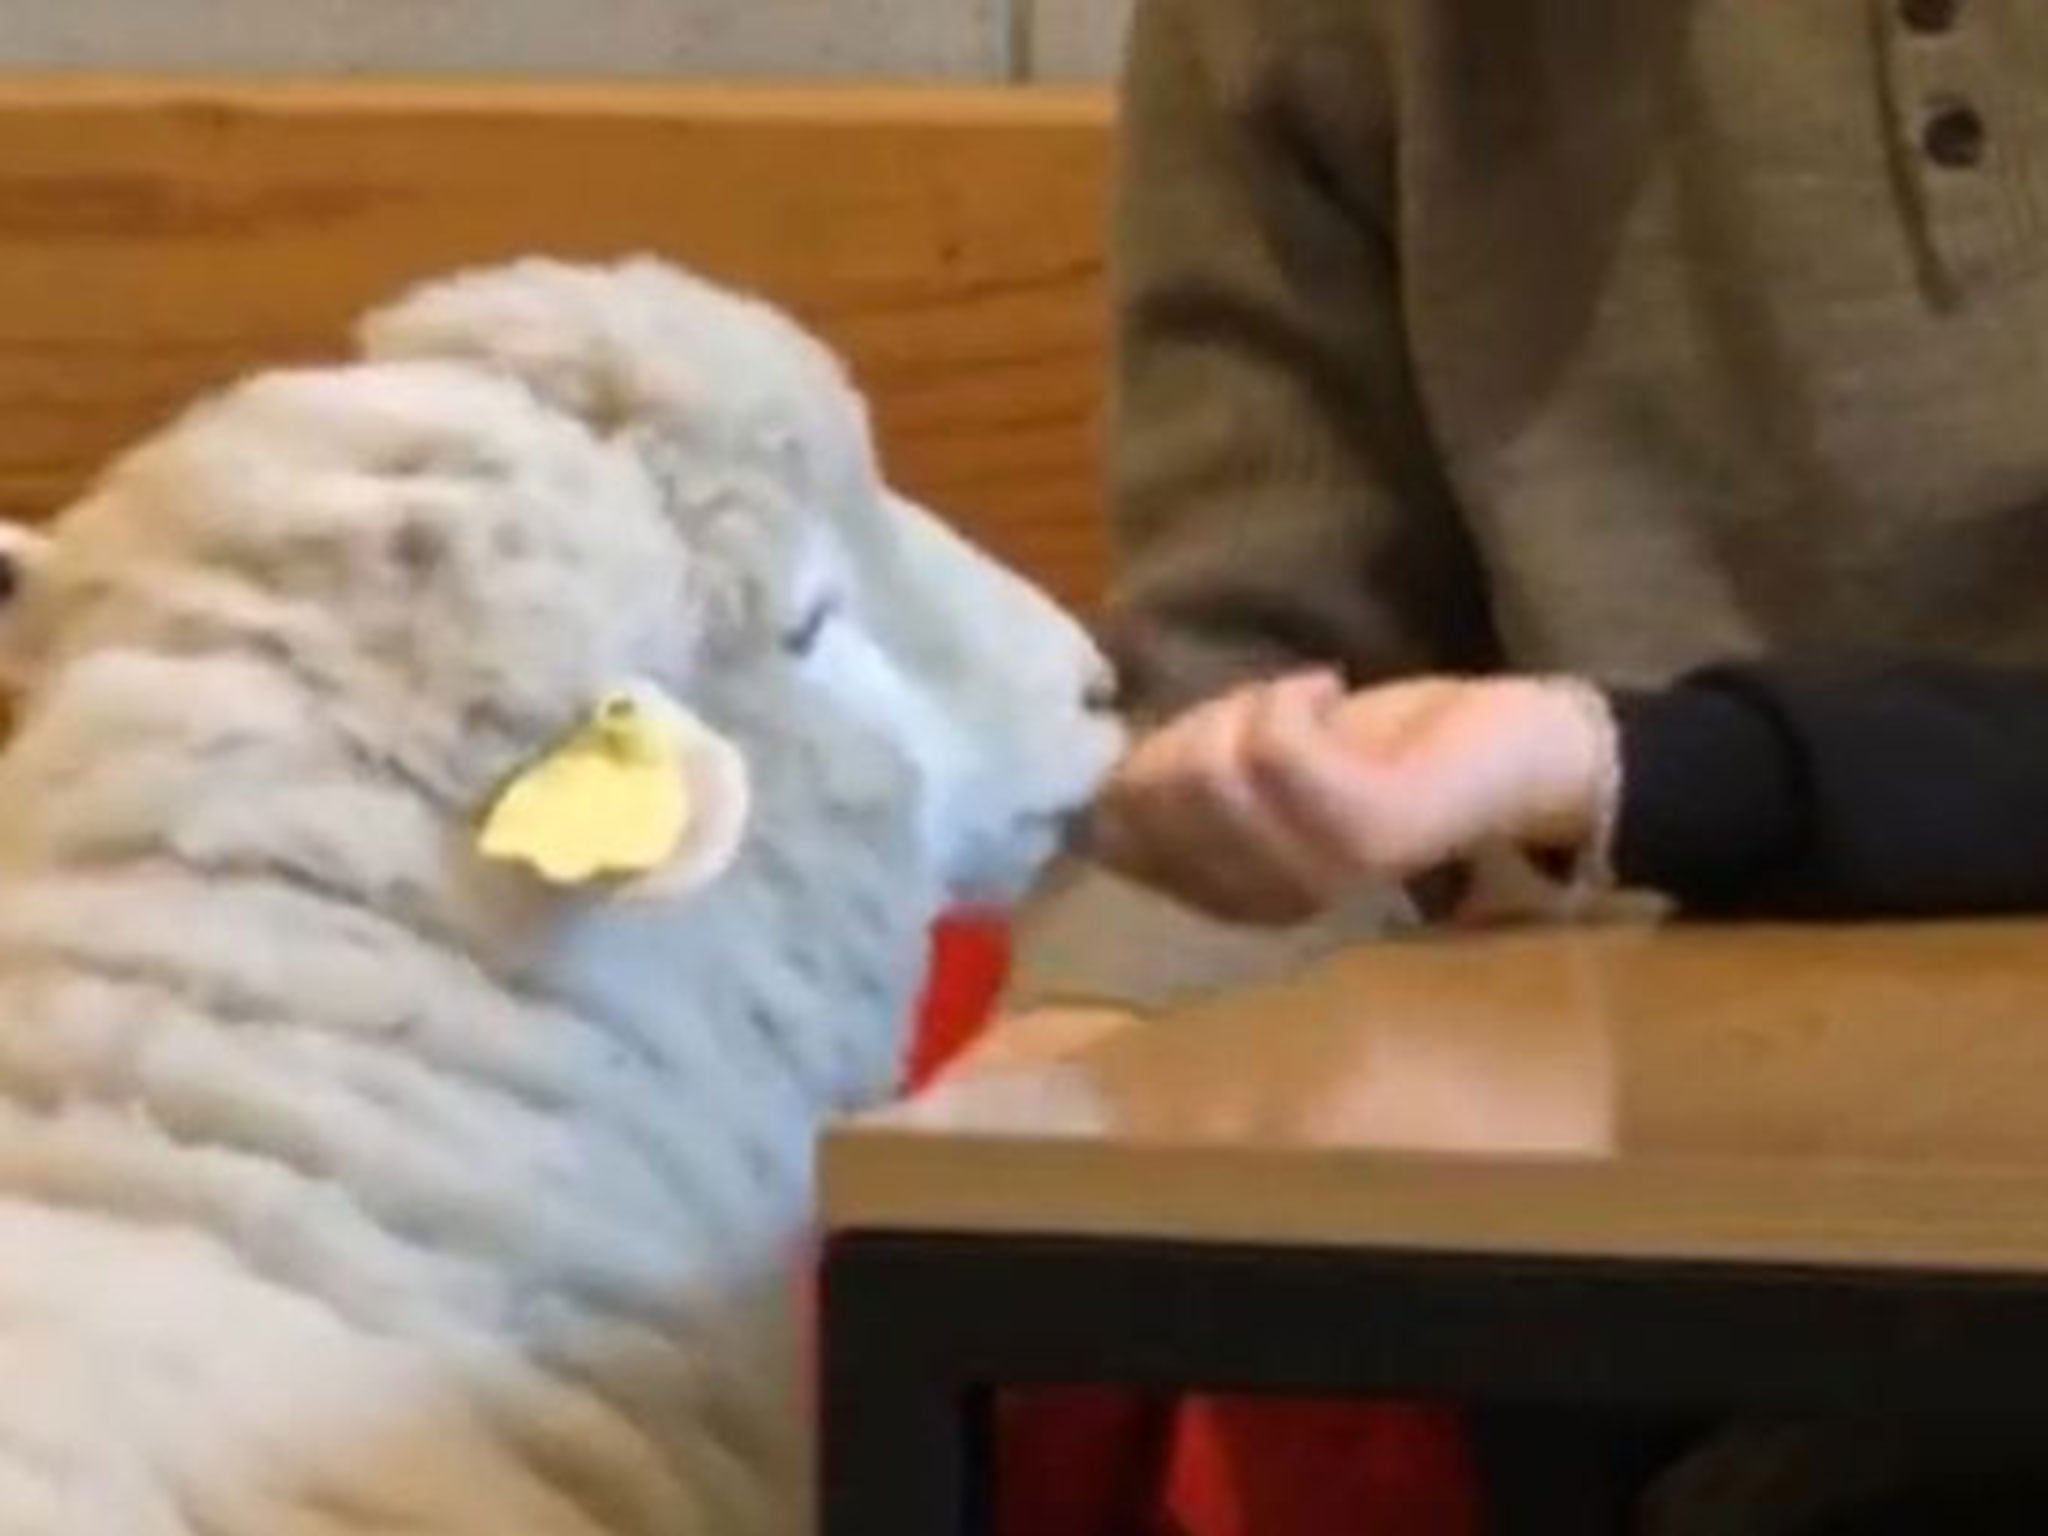 Customers feed sheep at Thanks to Nature Café